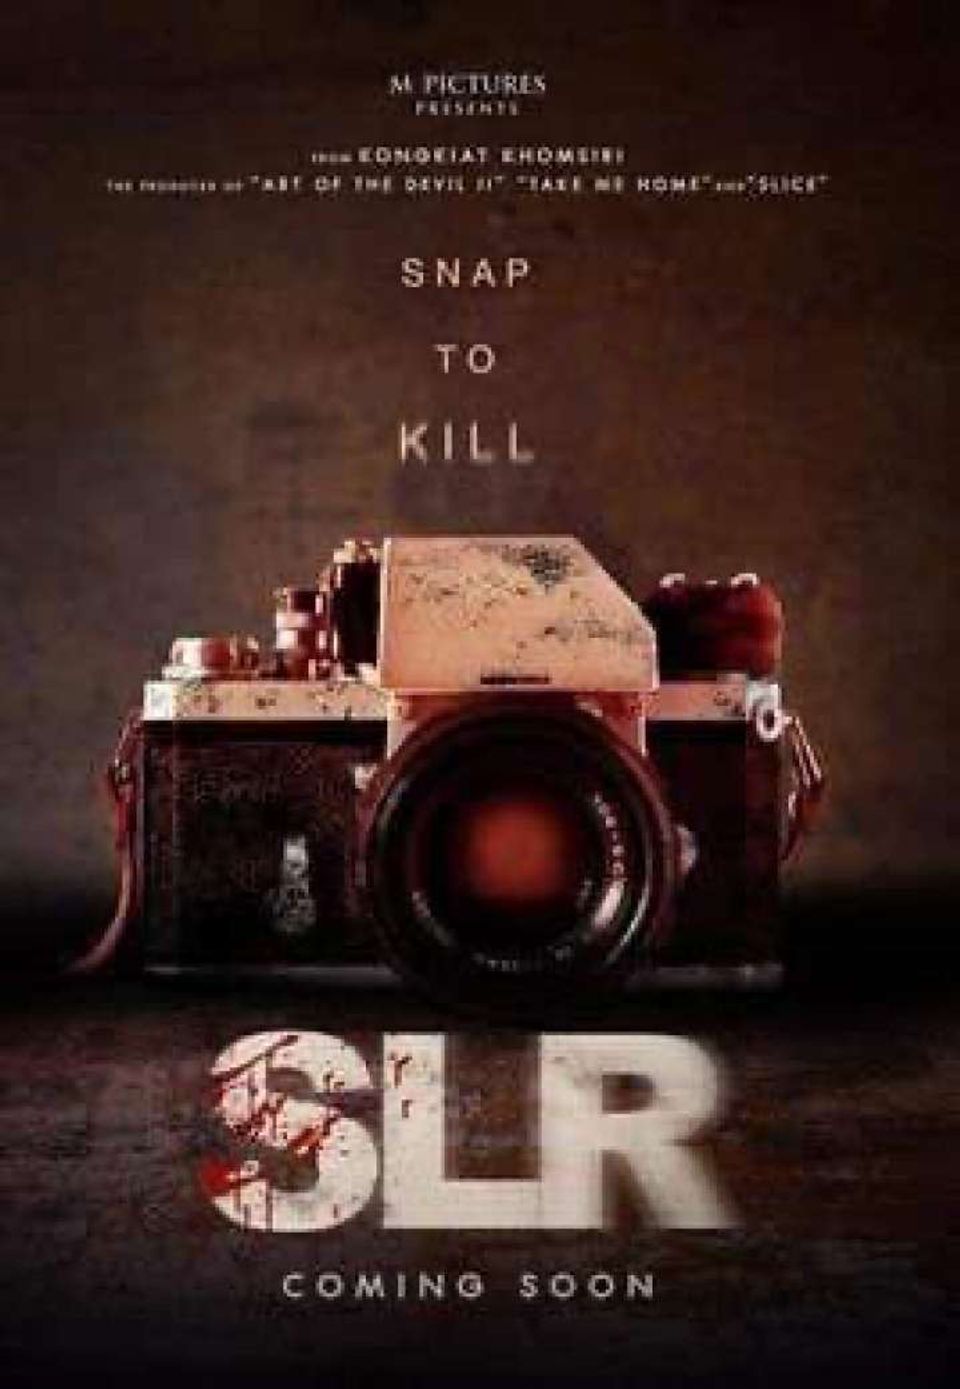 SLR กล้องติดตาย ชมทีเซอร์ใหม่ของ “เฌอปราง BNK48” ในหนังสยองเรื่องใหม่เข้าฉาย 21 เมษายนนี้ ในโรงภาพยนตร์